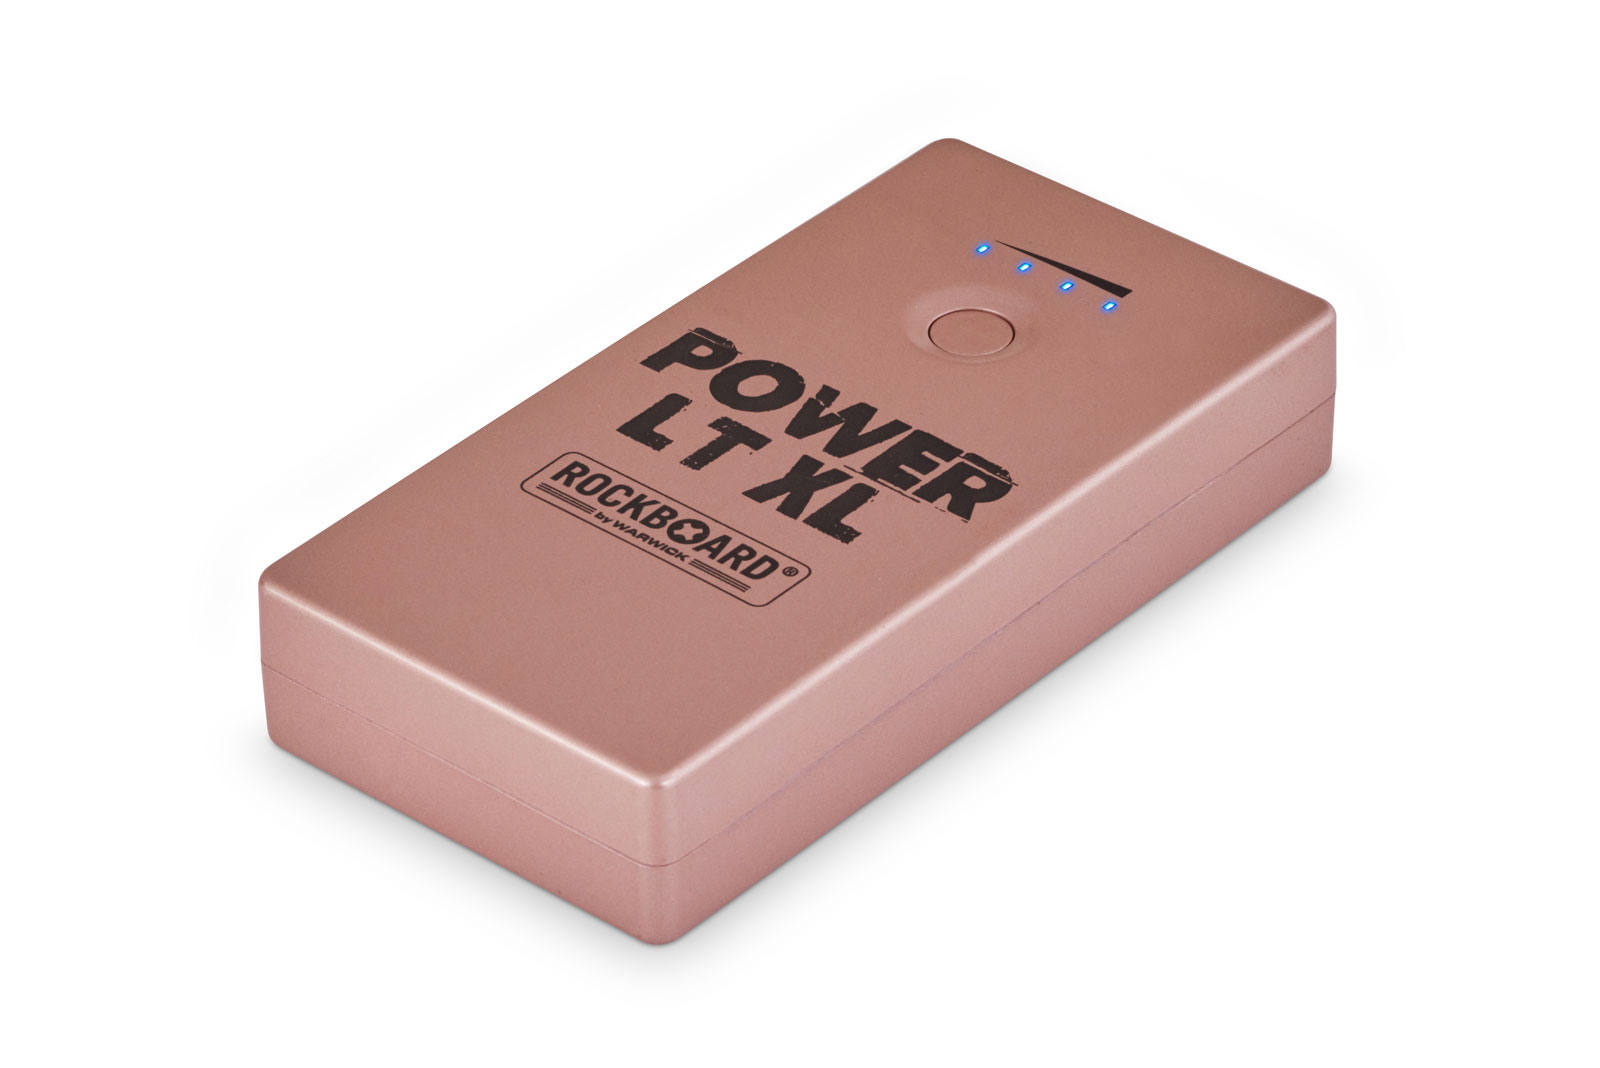 Rockboard Power Lt Xl Rose Gold - Power supply - Variation 1